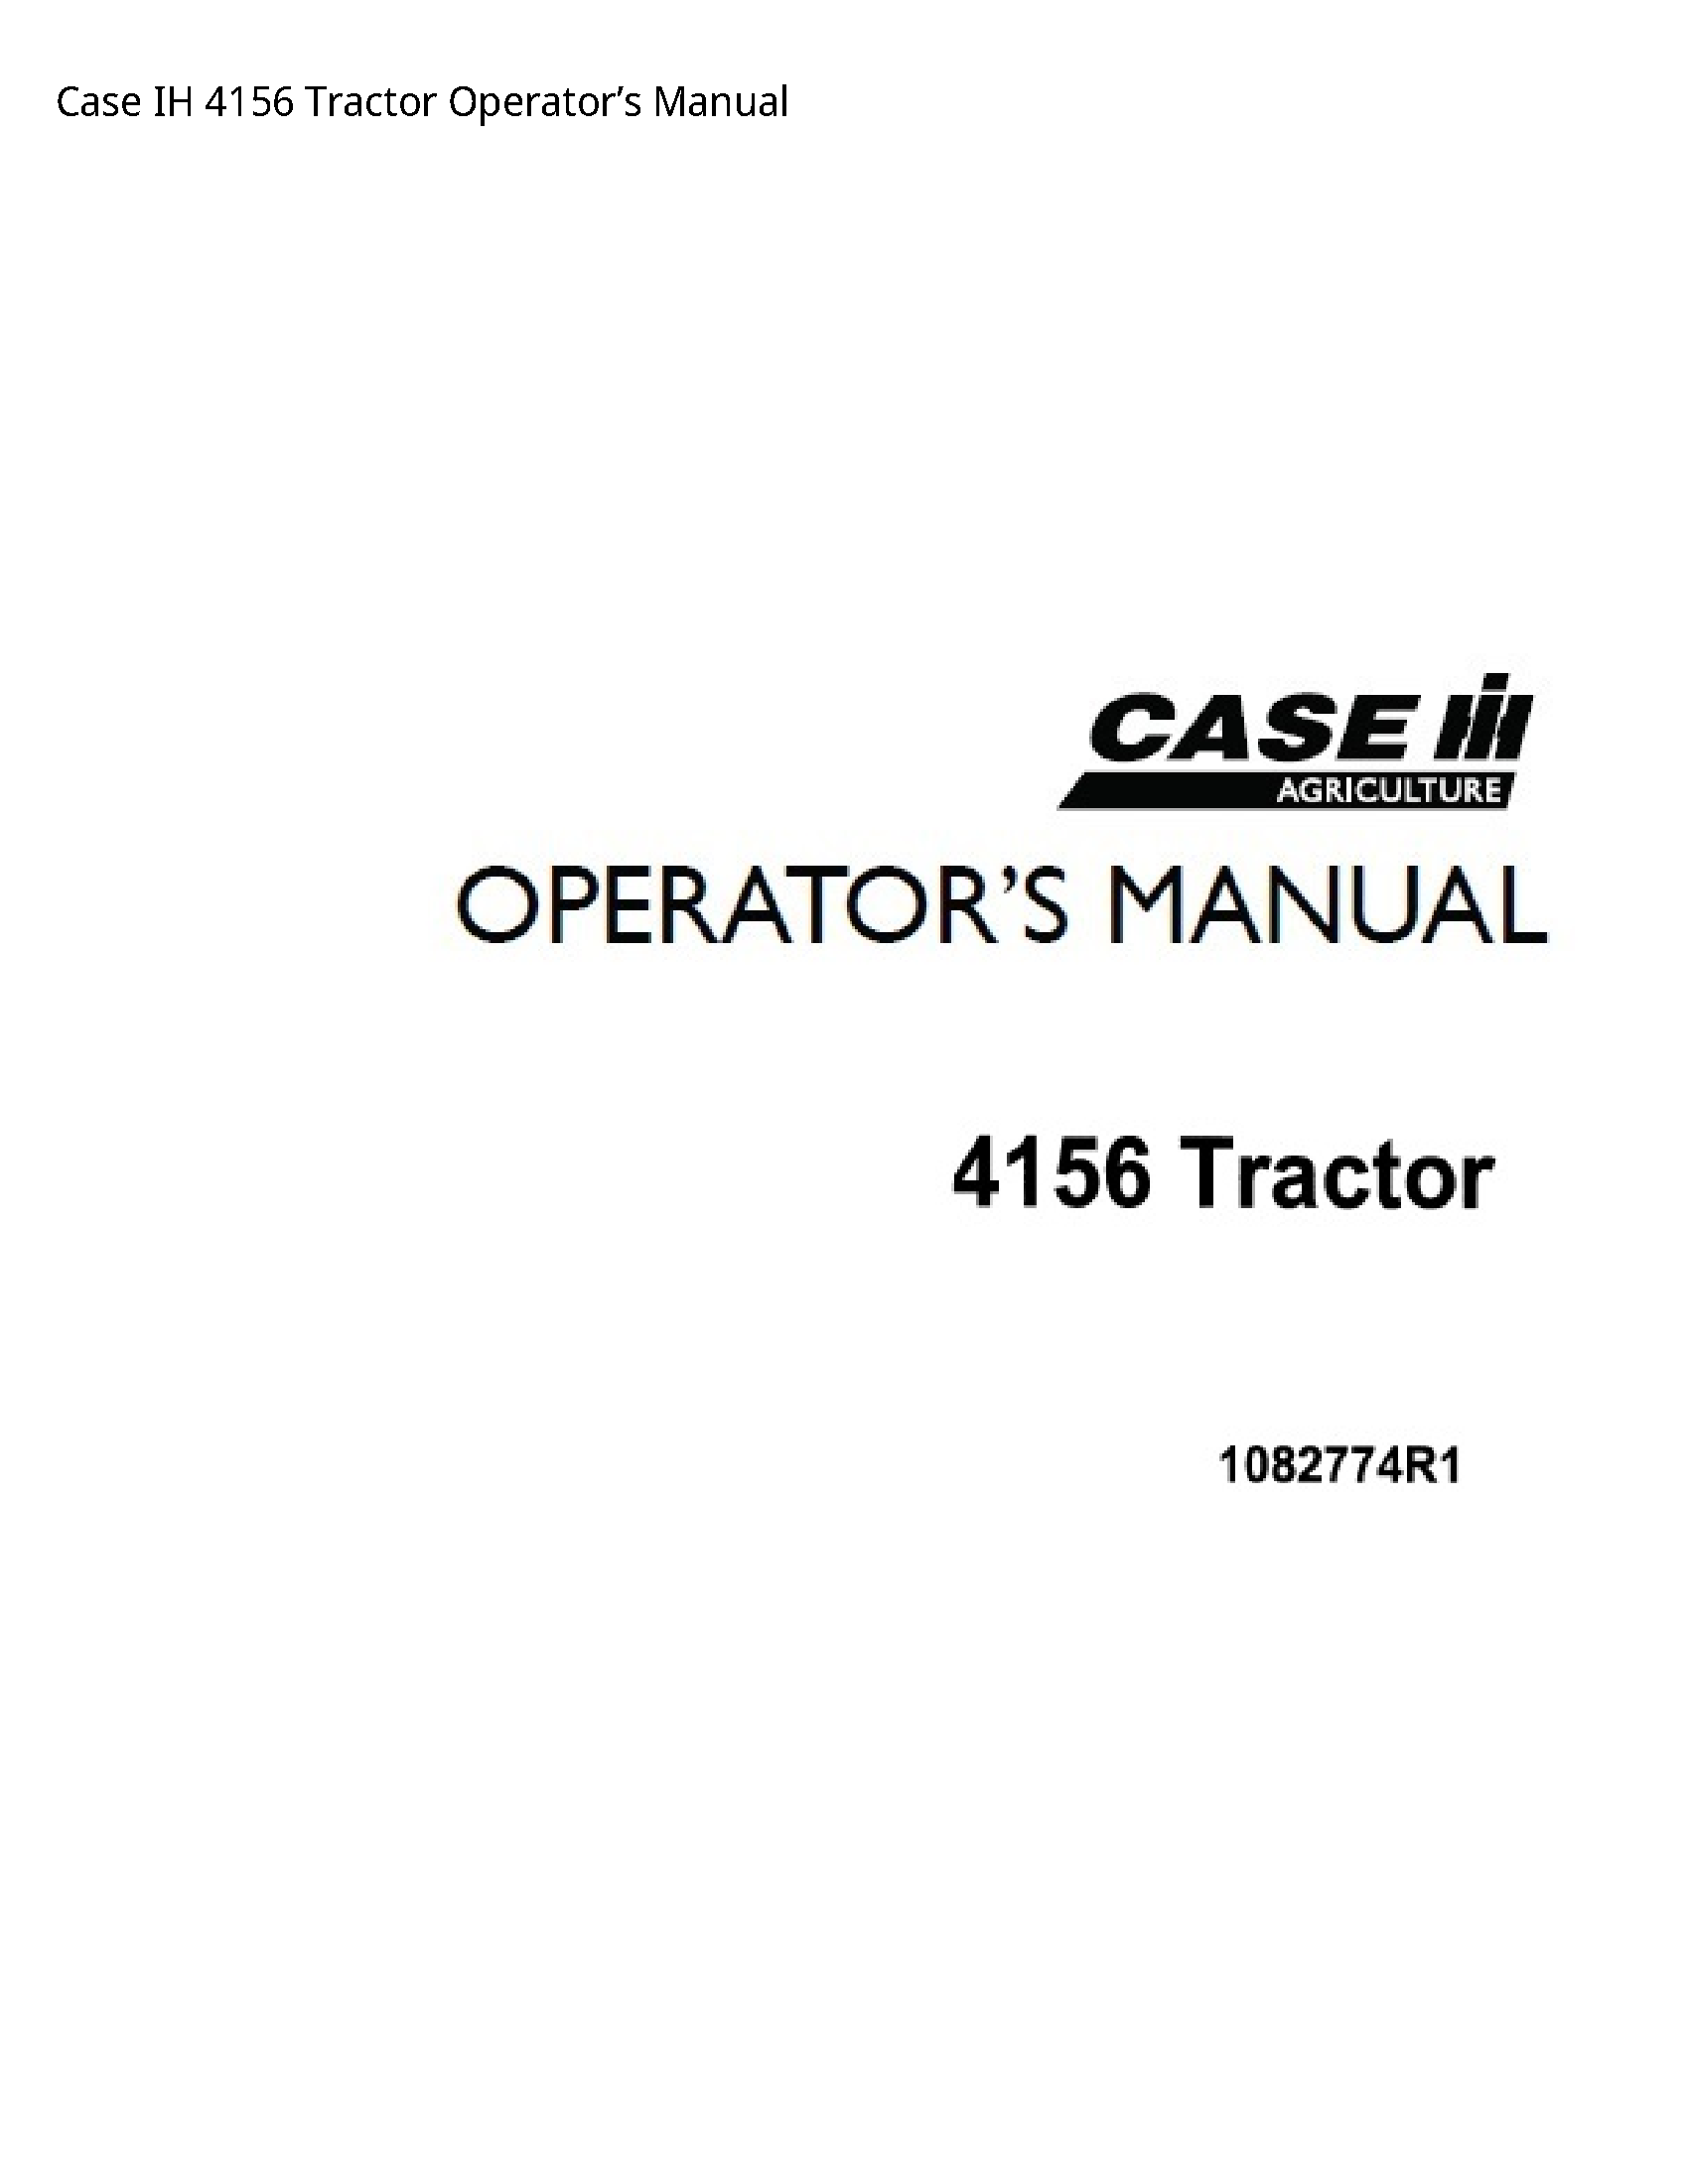 Case/Case IH 4156 IH Tractor Operator’s manual